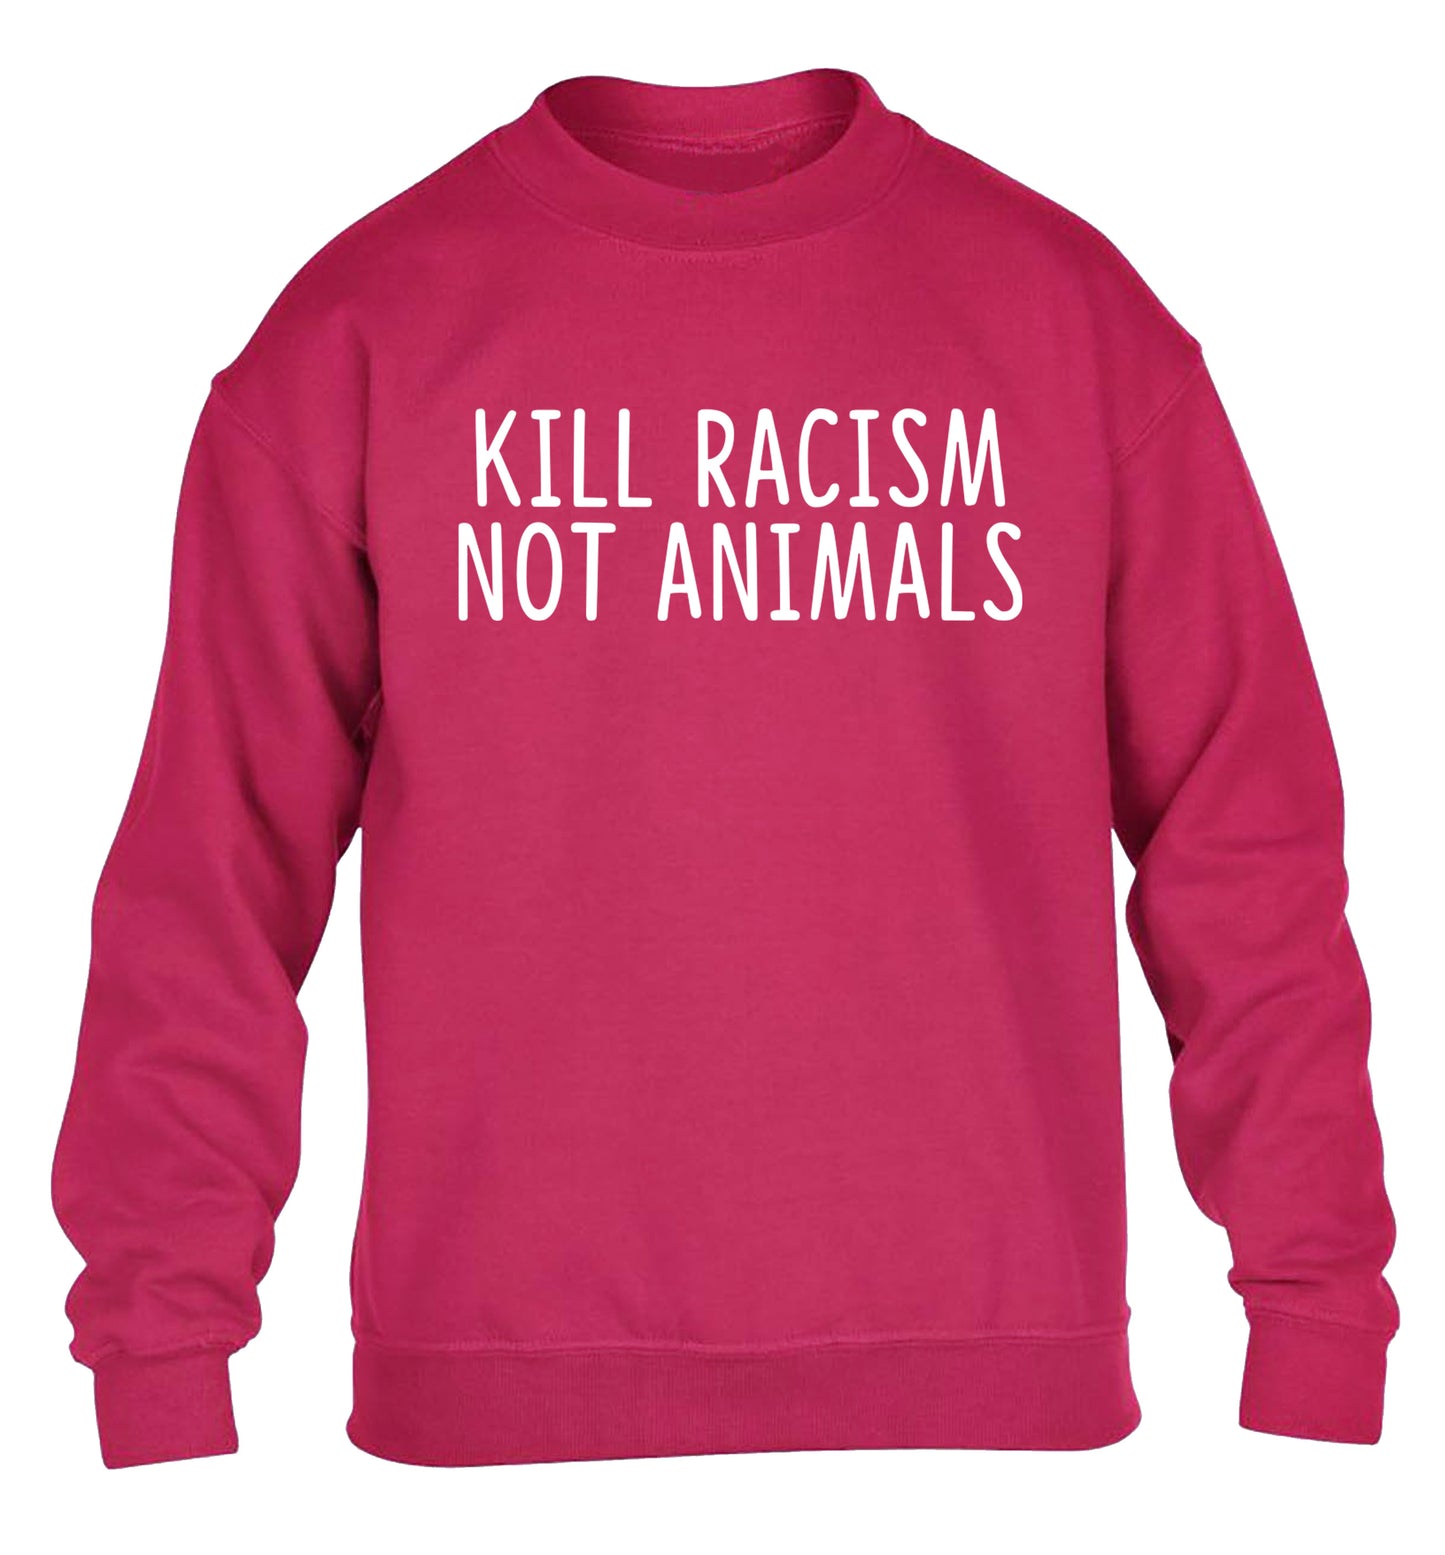 Kill Racism Not Animals children's pink sweater 12-13 Years